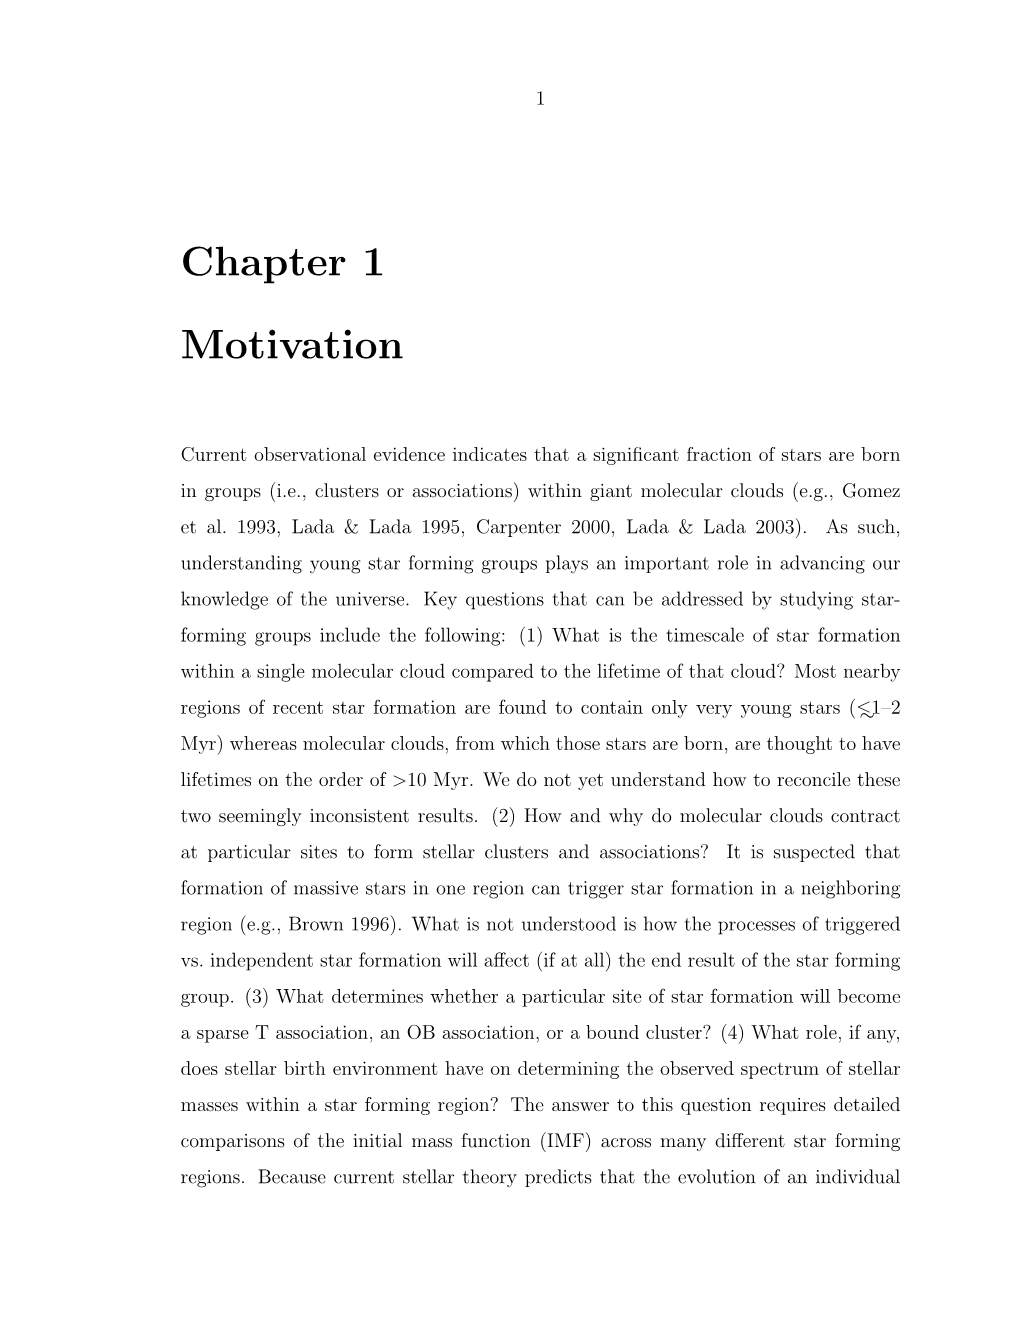 Chapter 1 Motivation